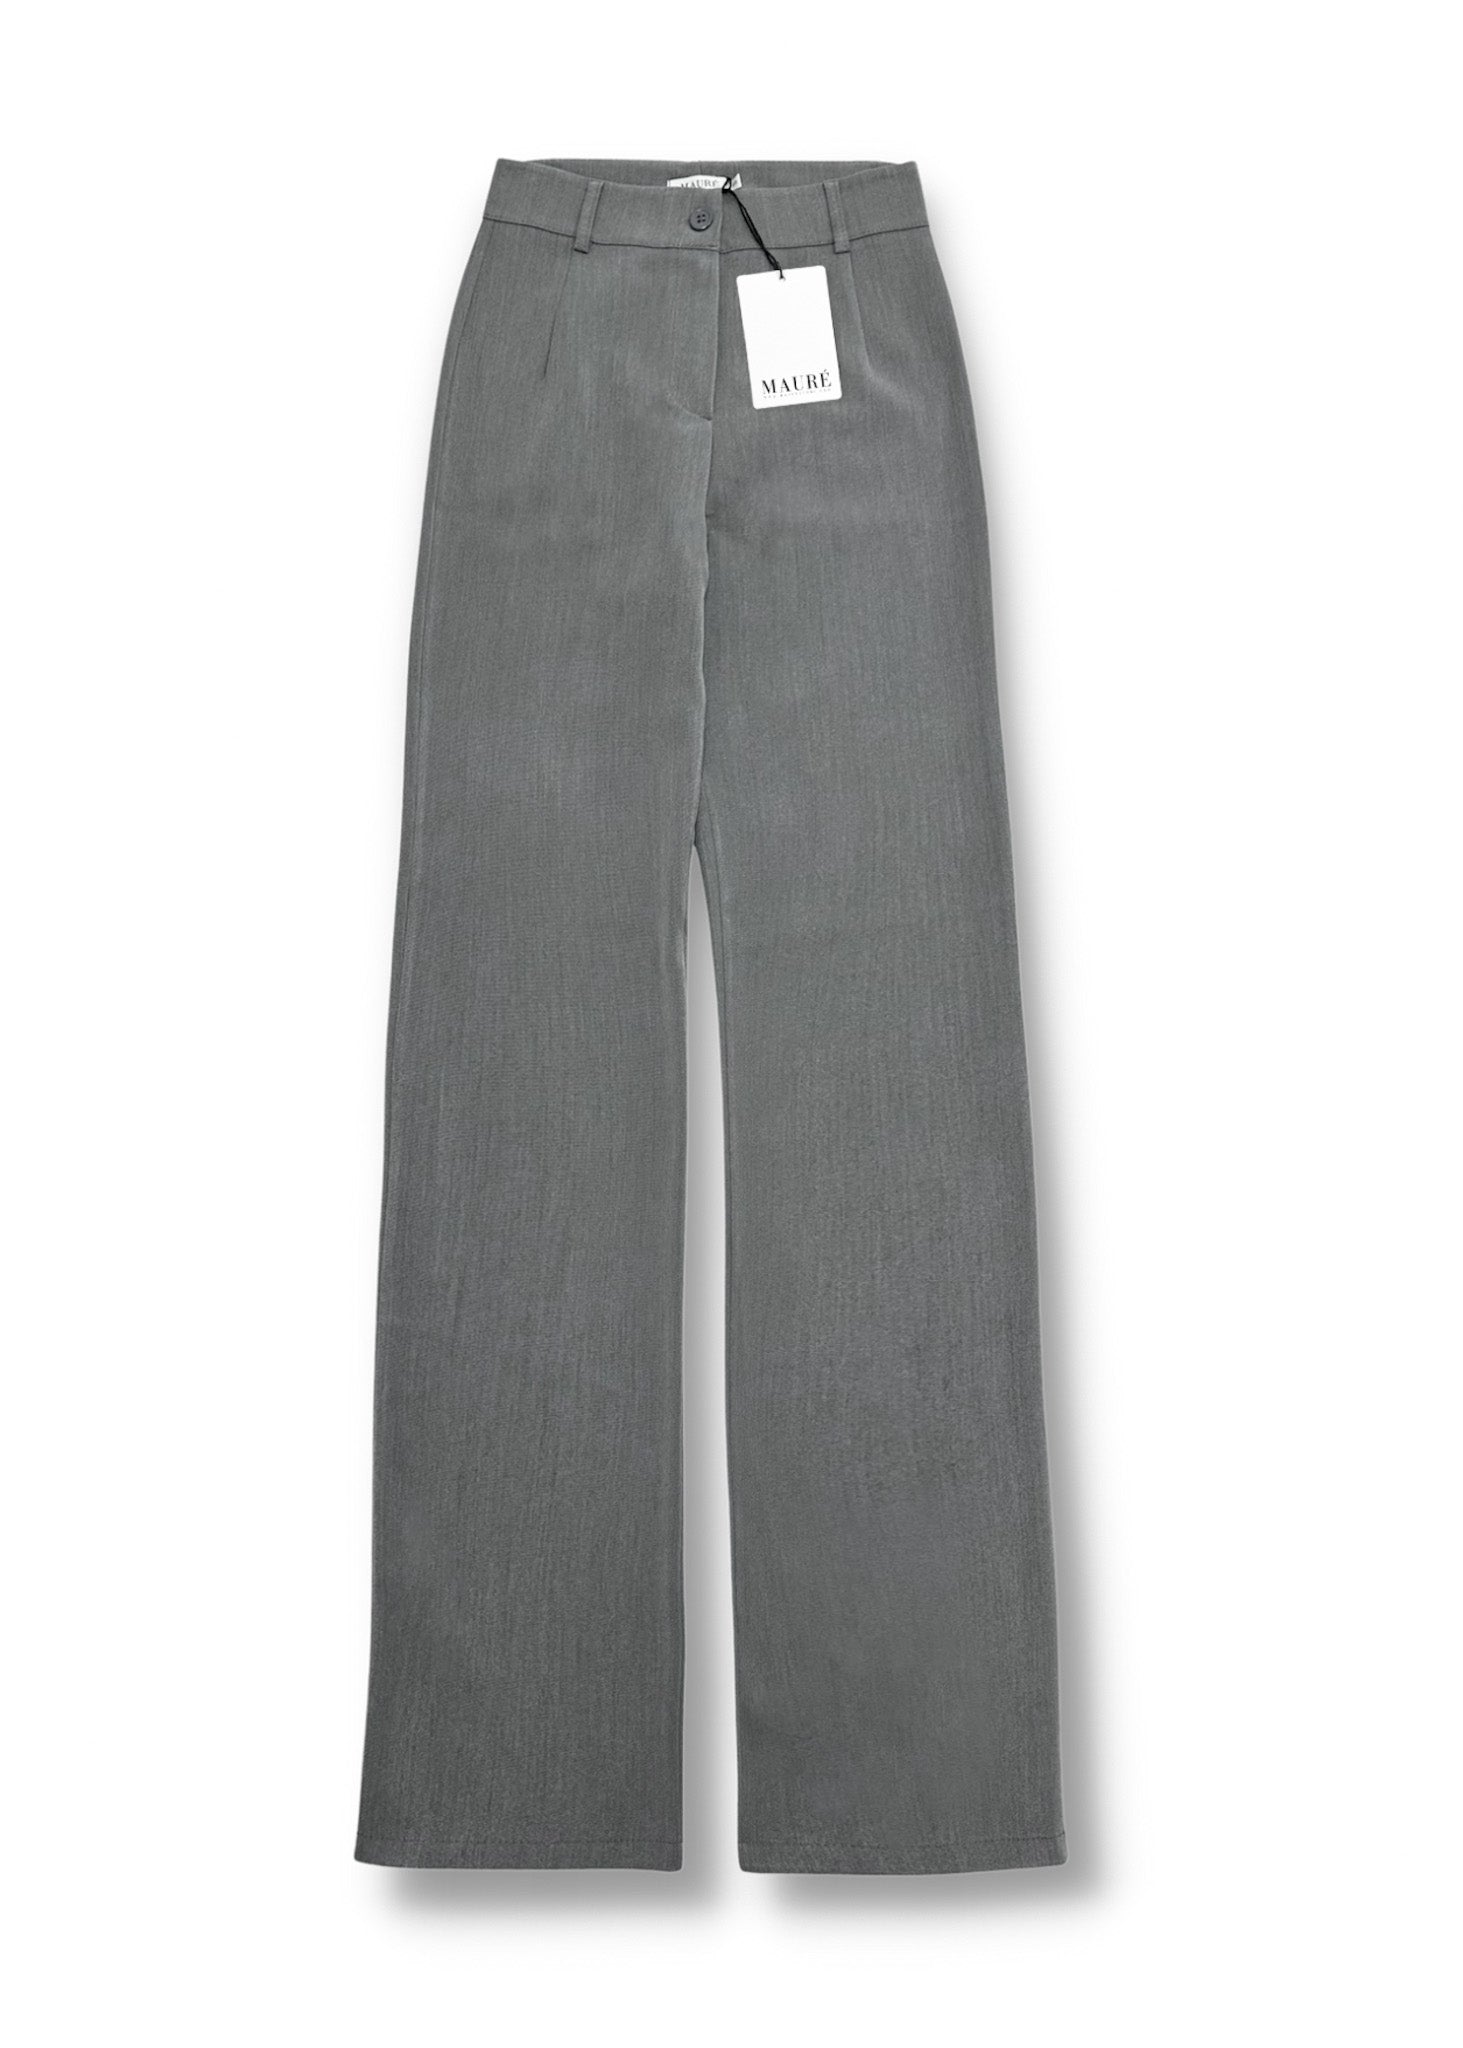 Straight leg pants classic light washed gray (TALL)